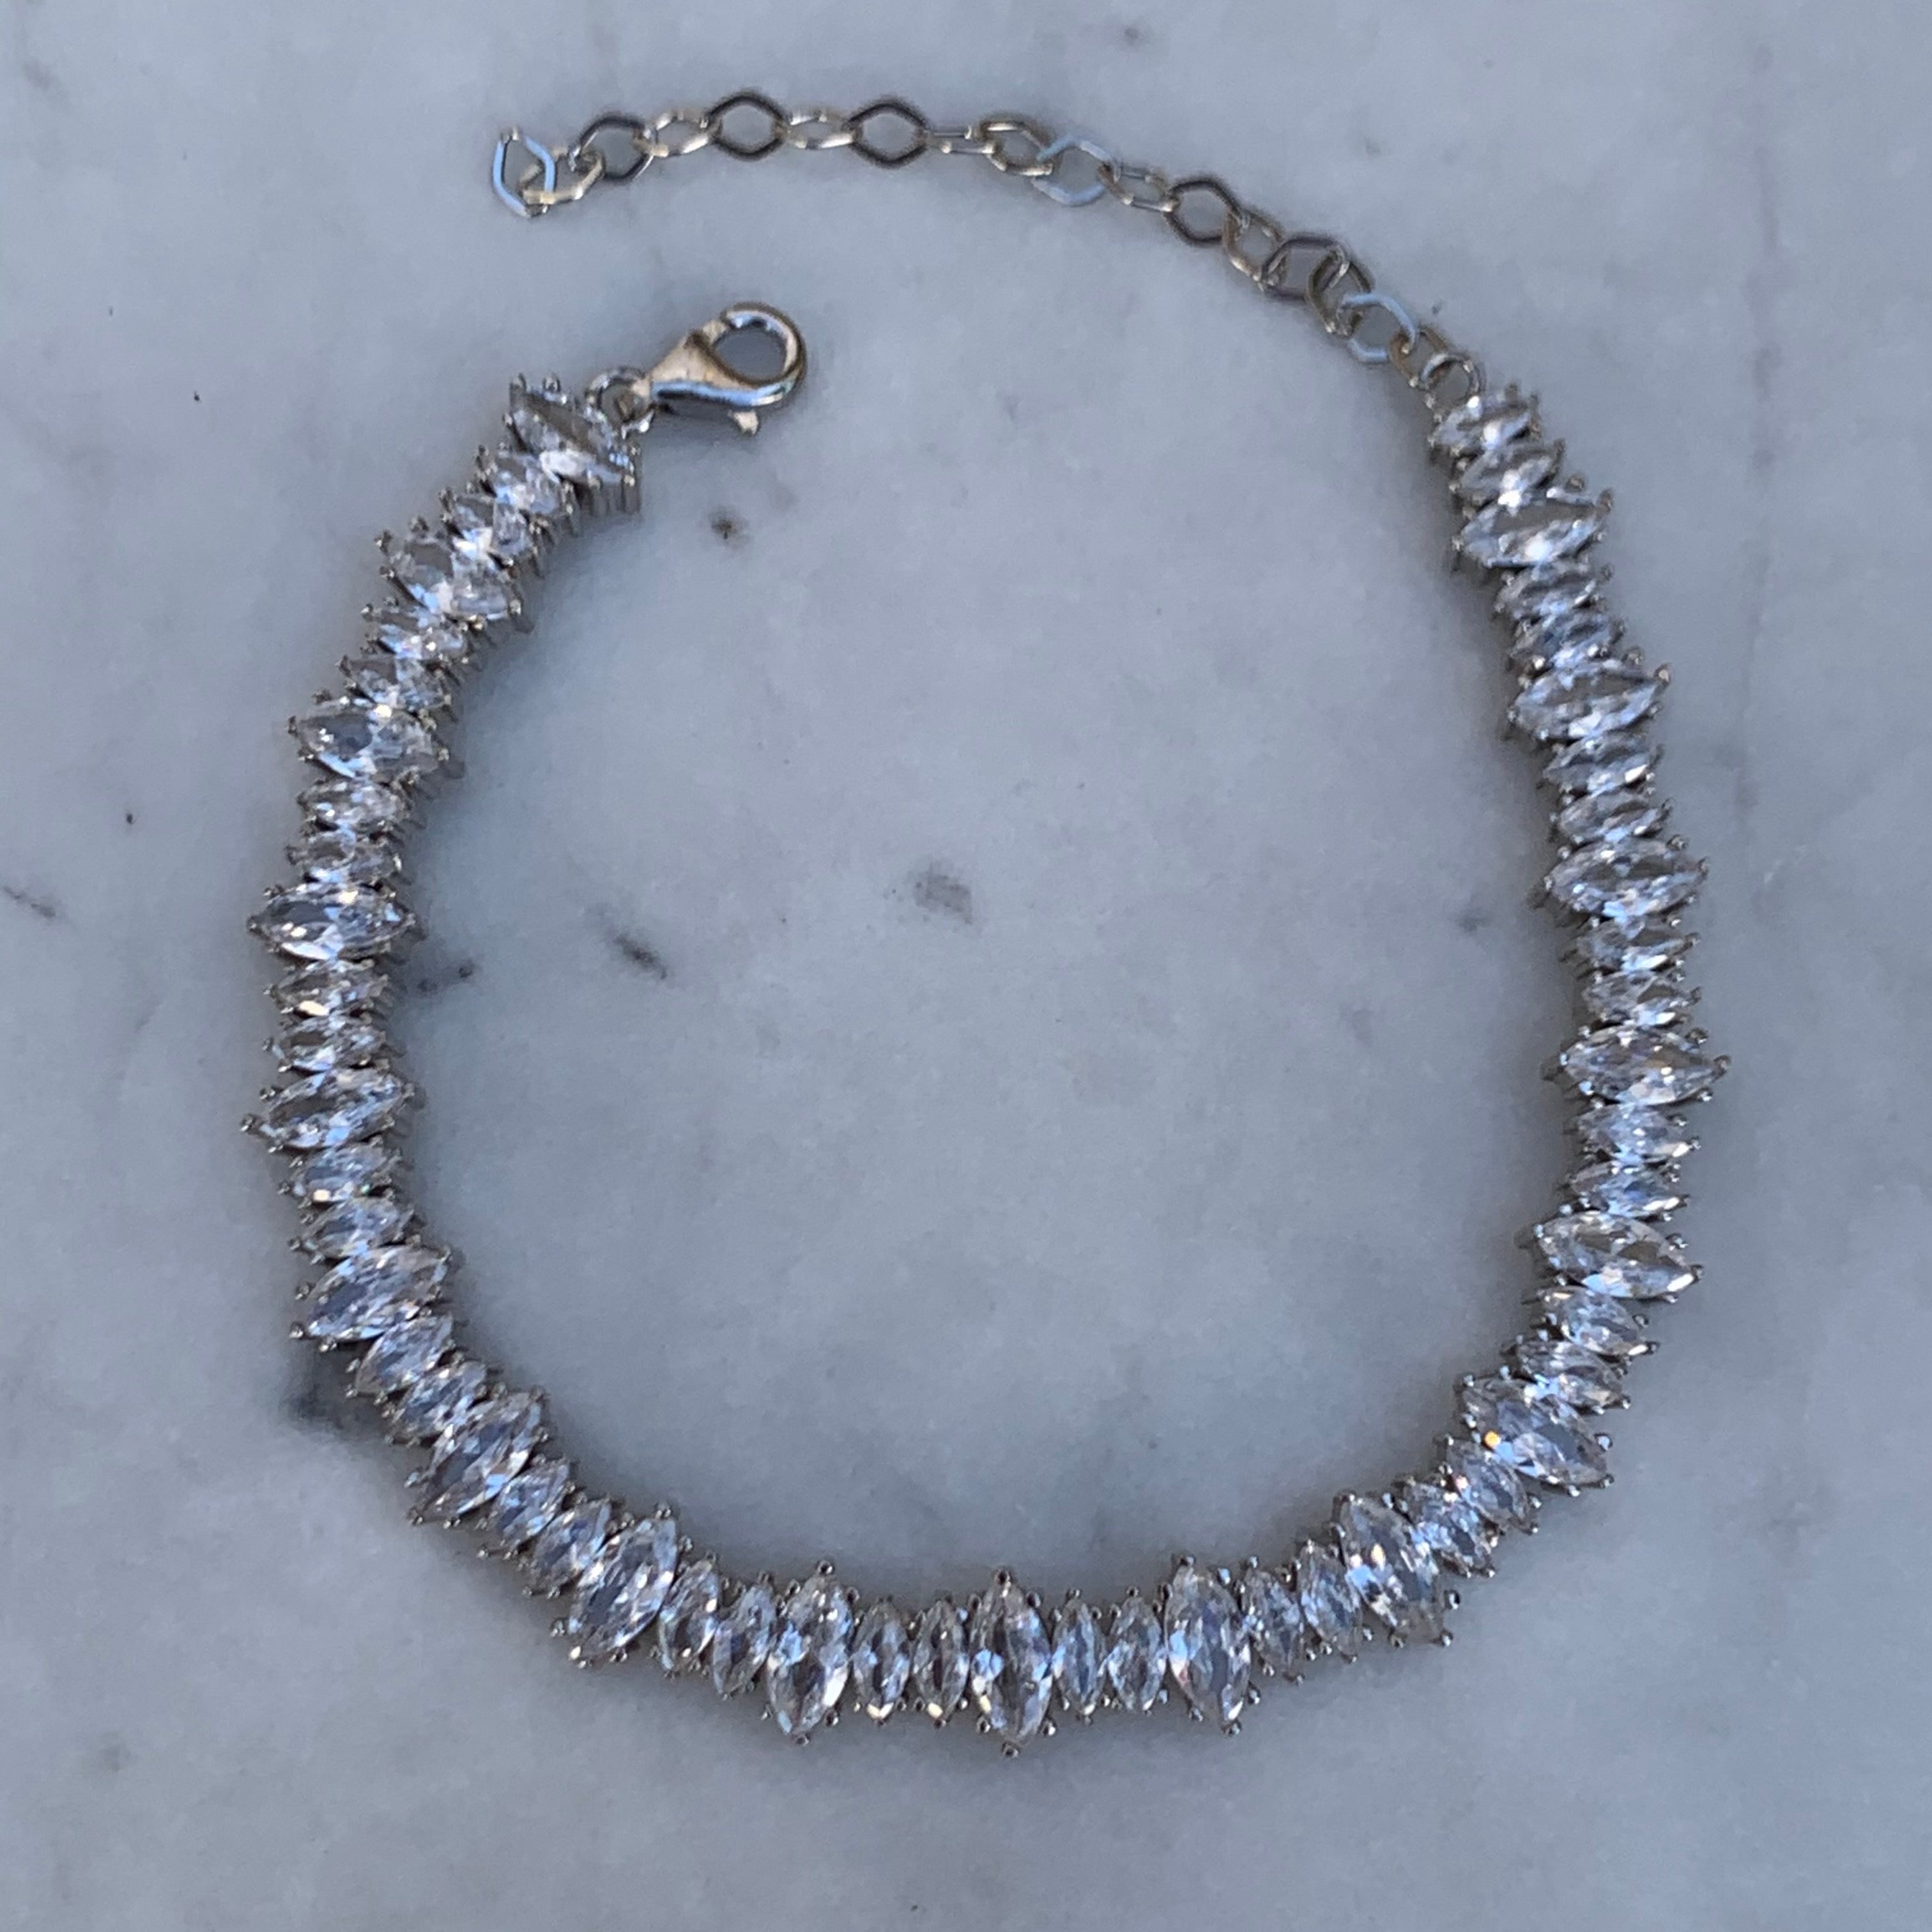 Sterling silver baguette cz diamond bracelet